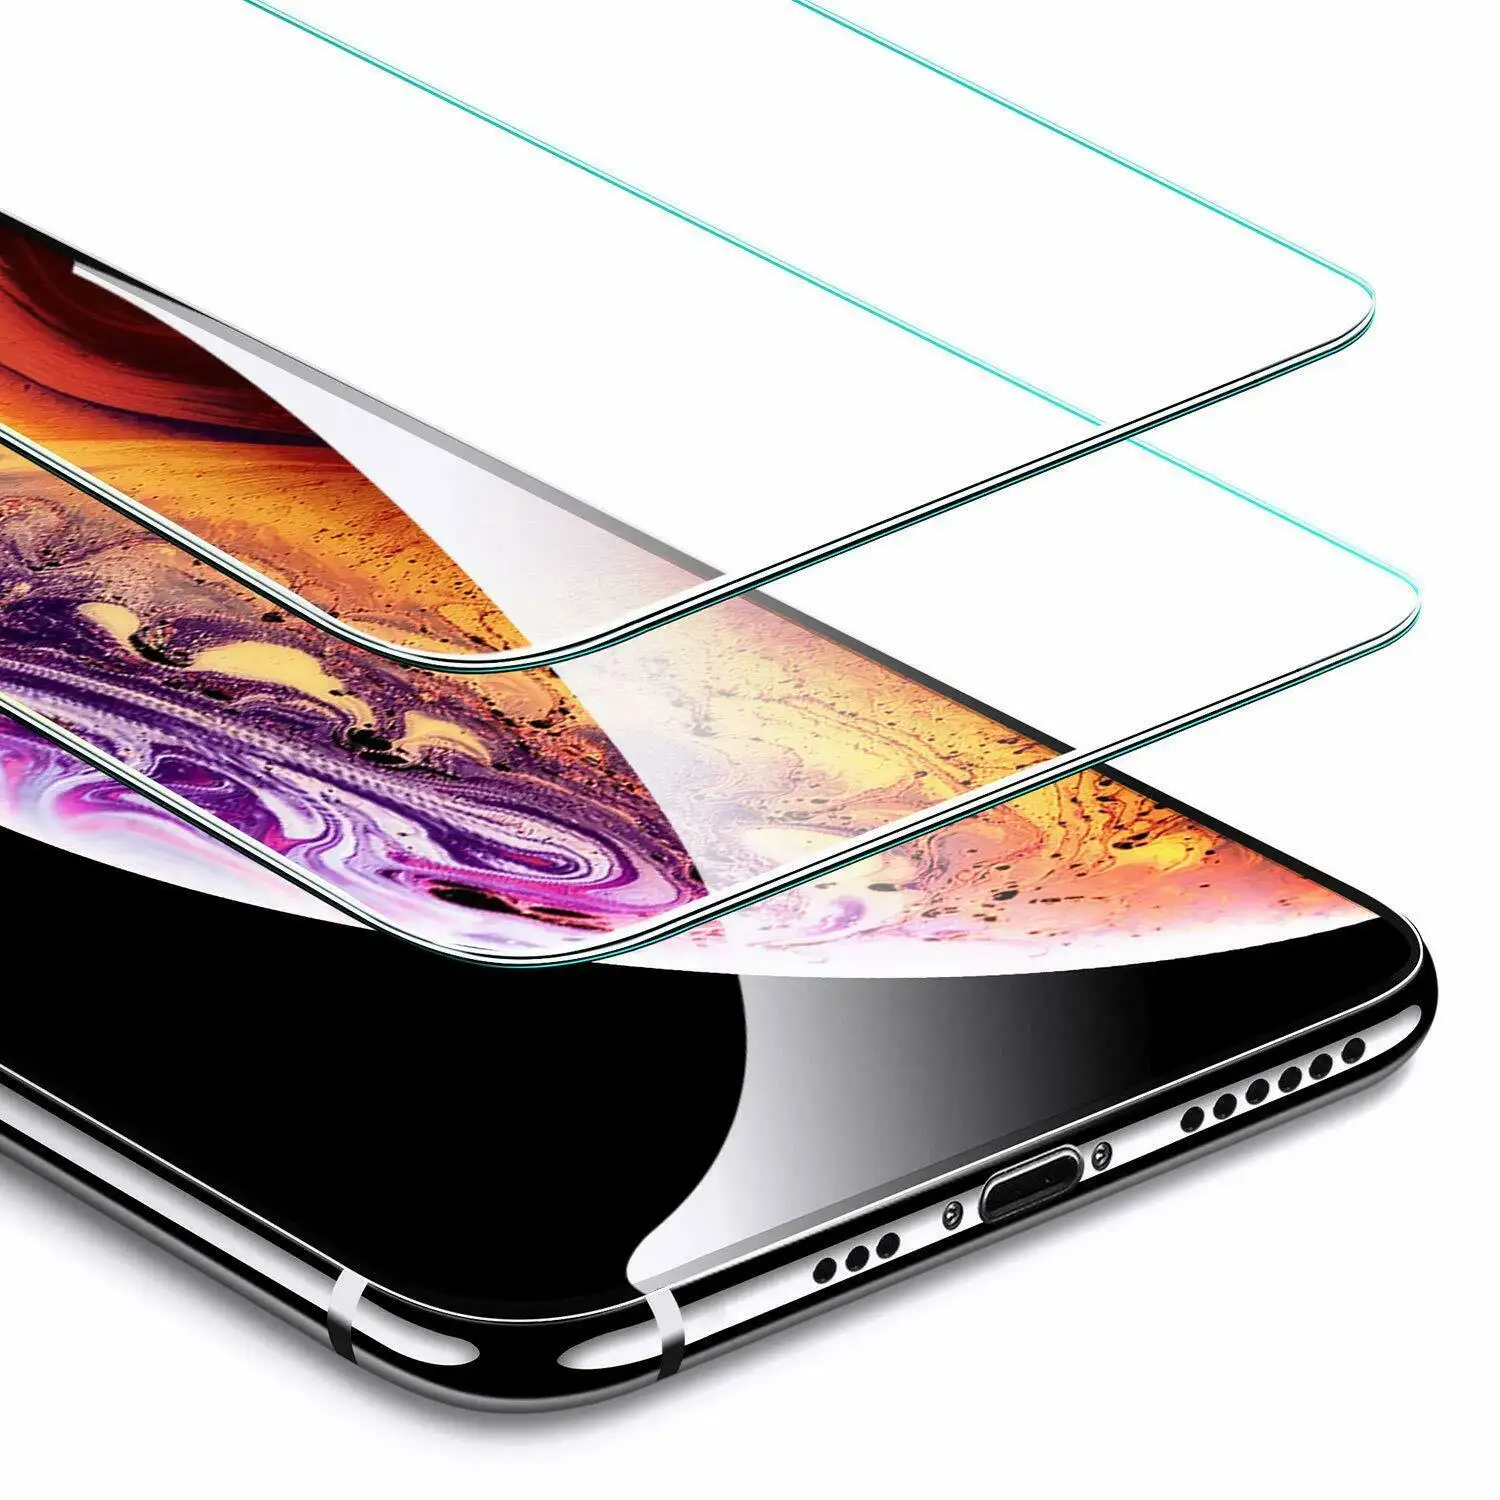 Стекло защиты экрана. Защитное стекло для iphone XS. Стекло iphone XS Max. Защитные стекла Tempered Glass. Защитная пленка Tempered Glass.